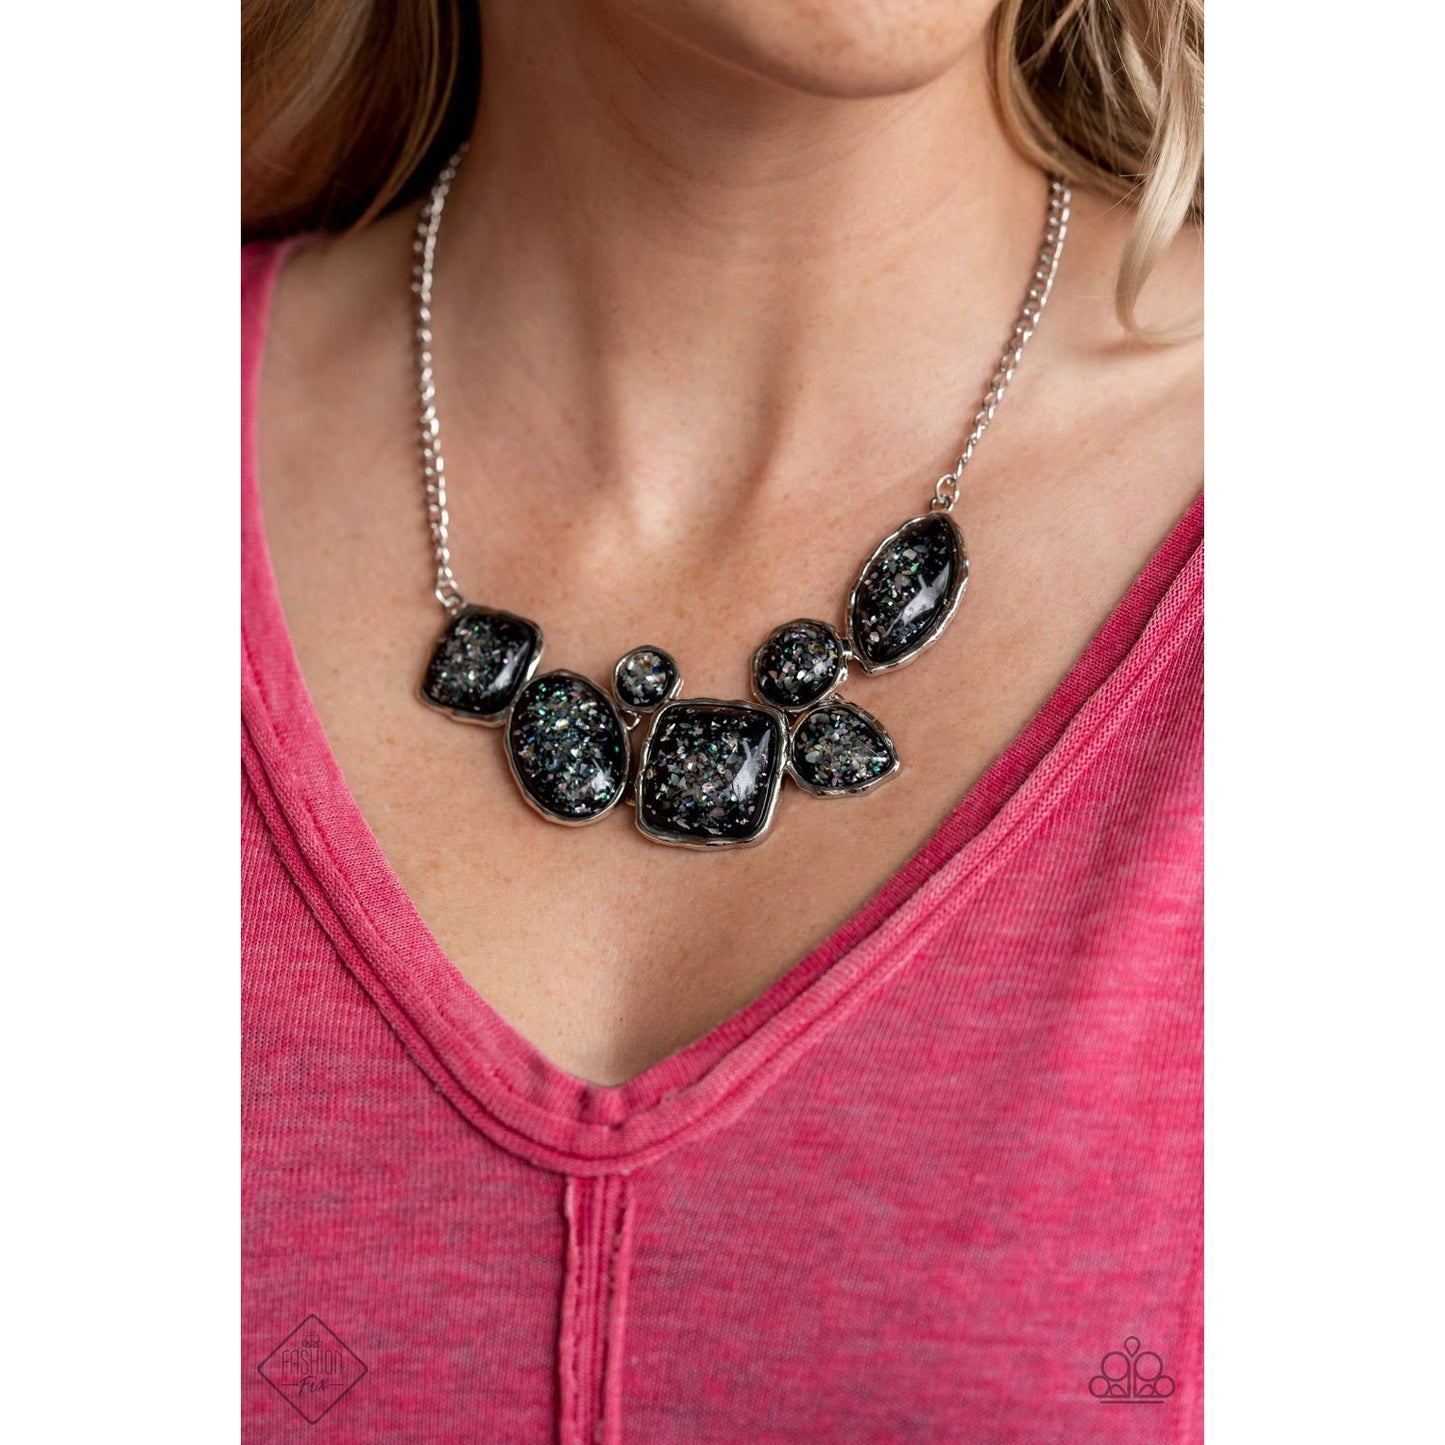 So Jelly - Black Necklace - Paparazzi Accessories - GlaMarous Titi Jewels